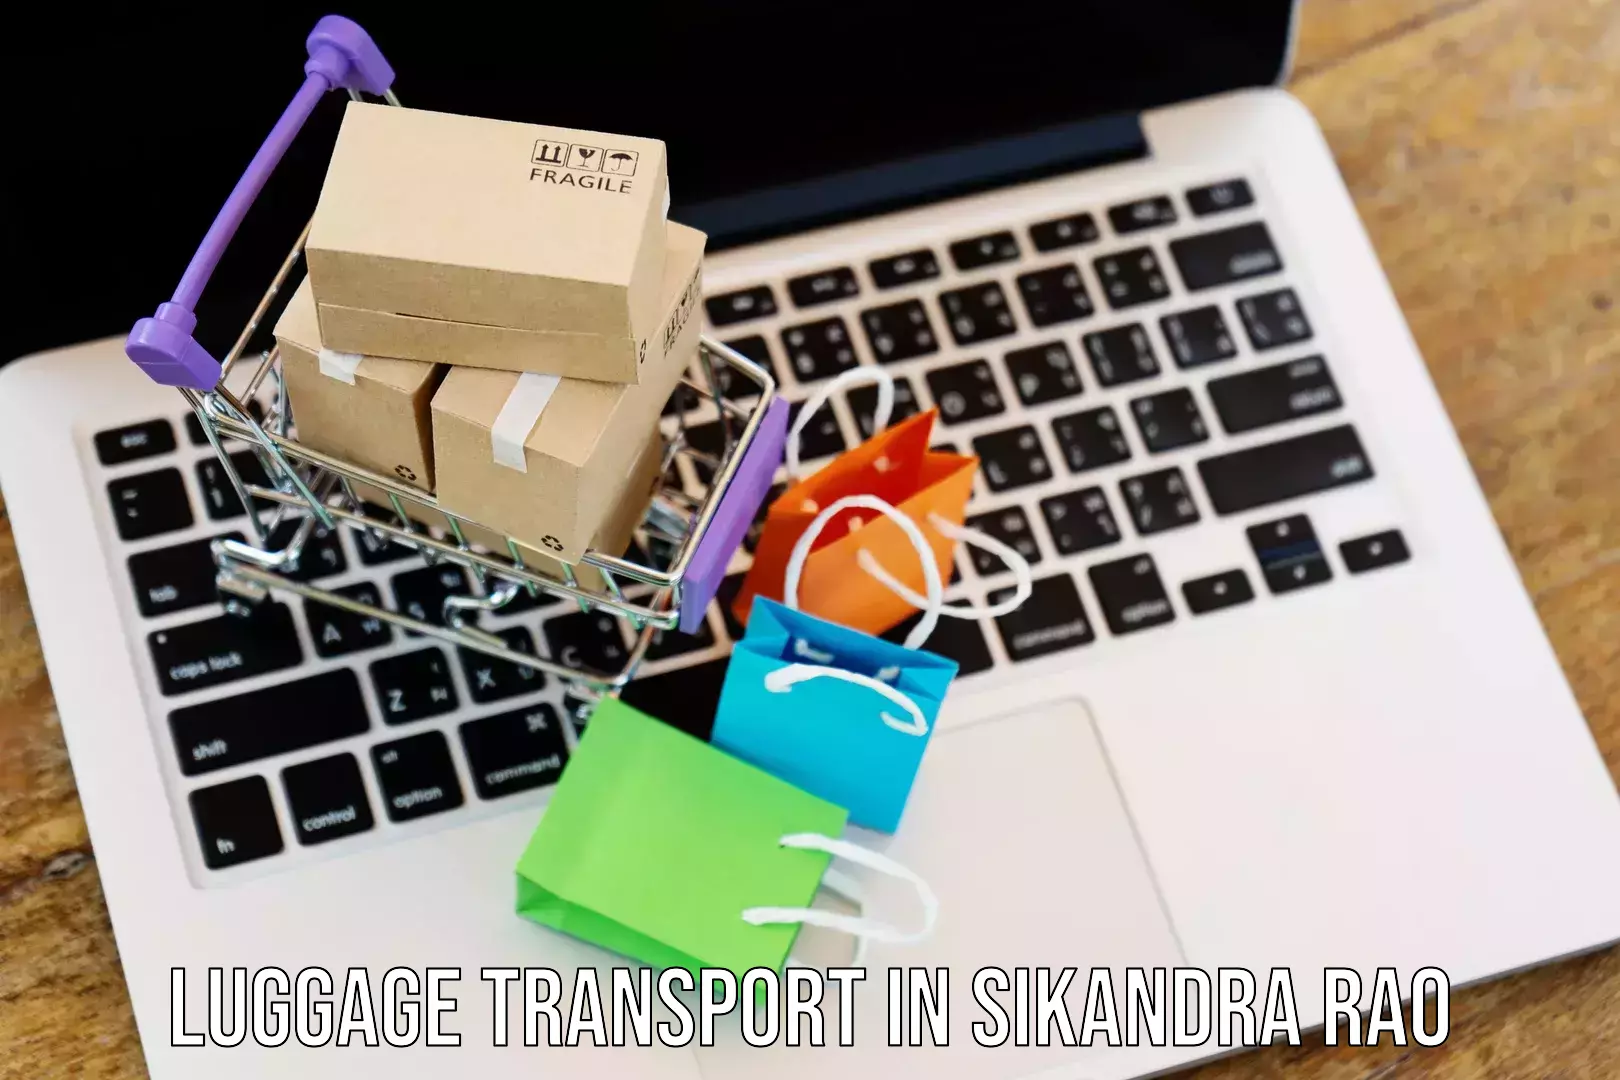 Multi-destination luggage transport in Sikandra Rao